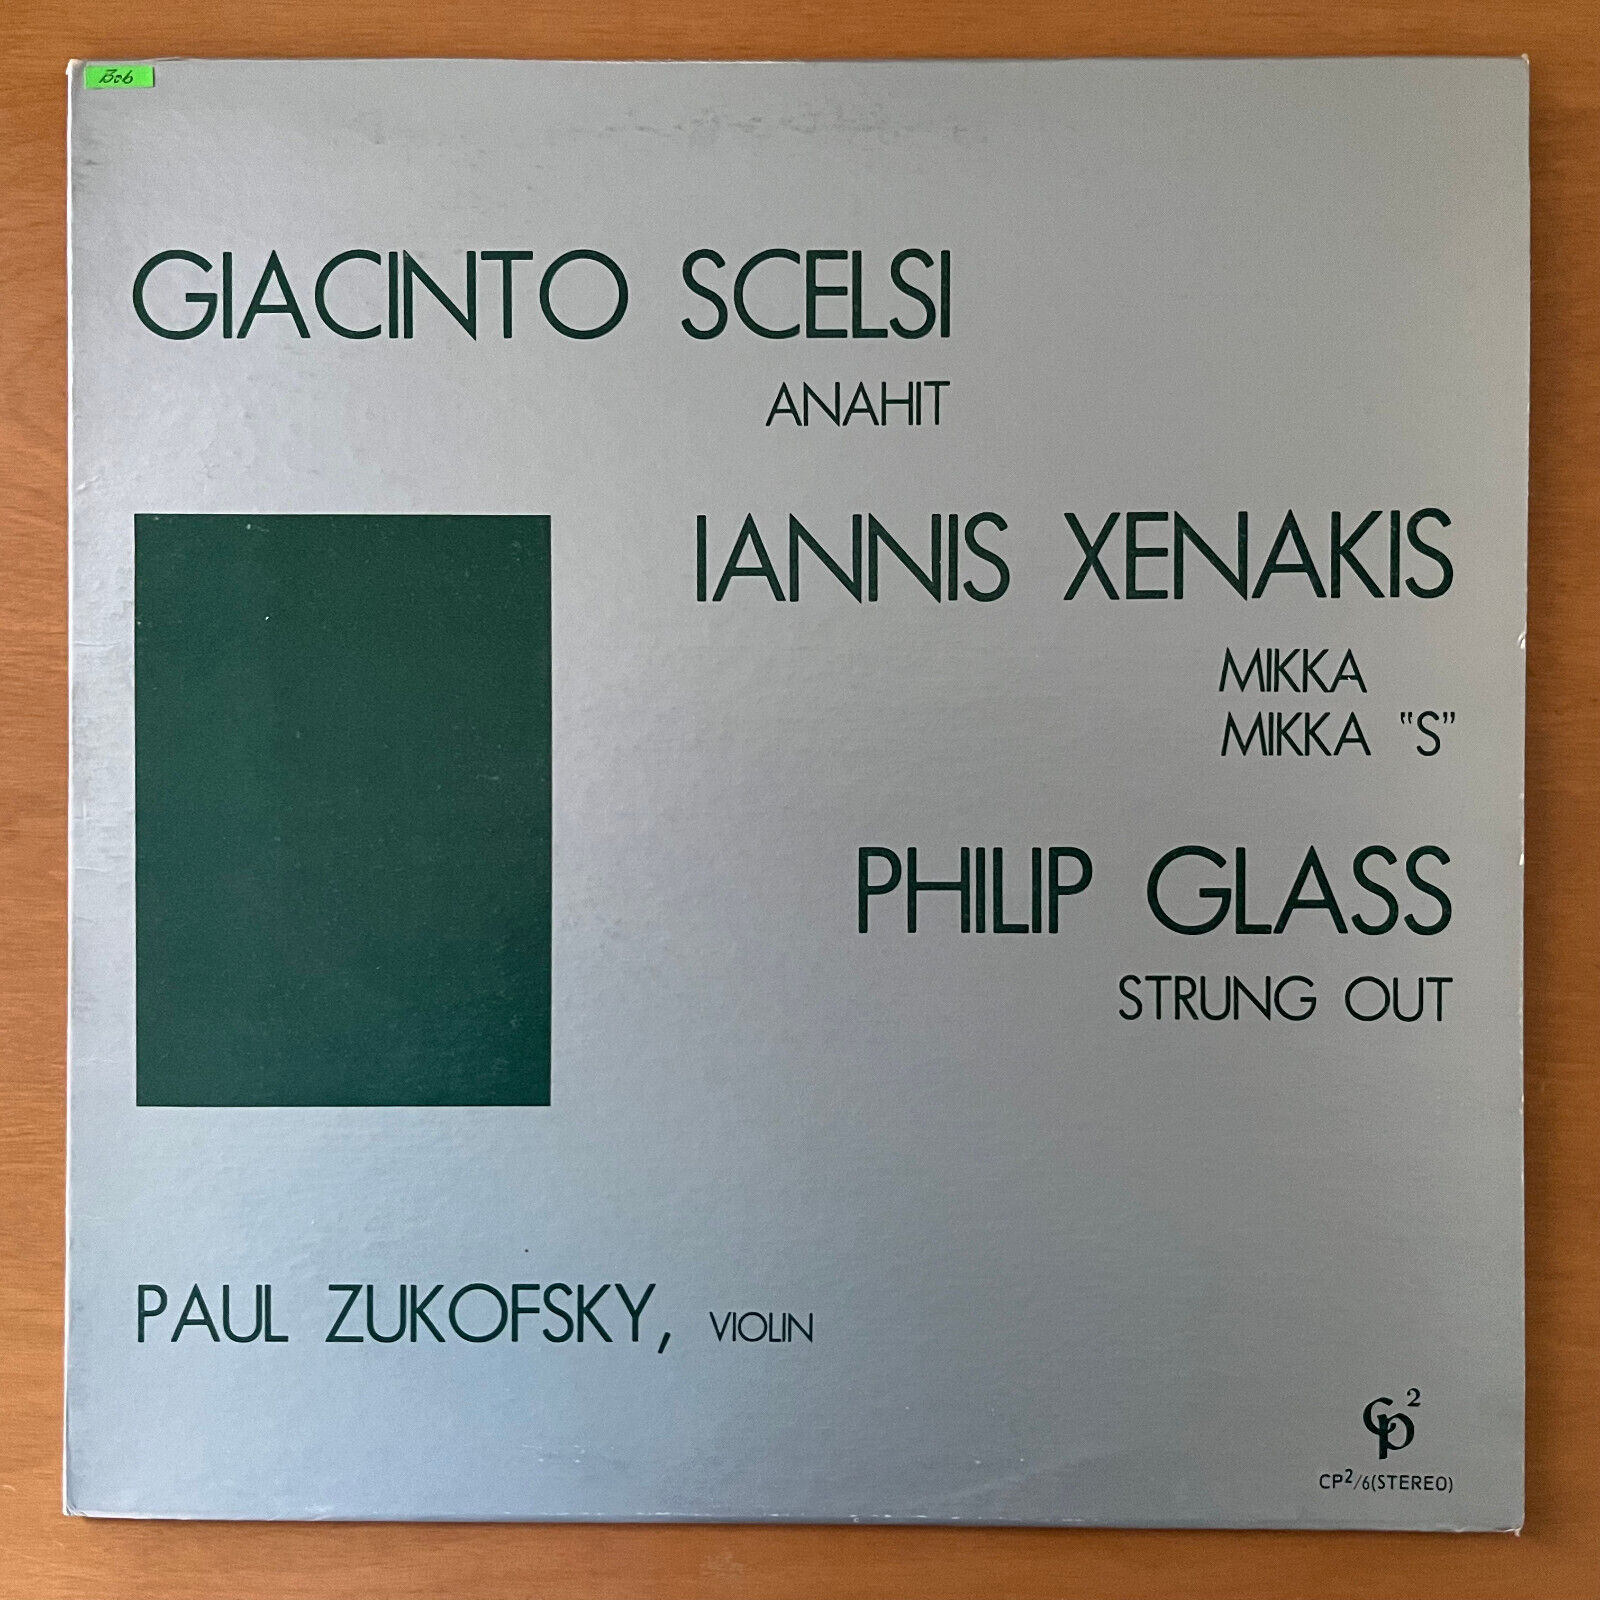 LP - Paul Zukofsky - Scelsi / Xenakis / Philip Glass "Strung Out" - 1976 GP2